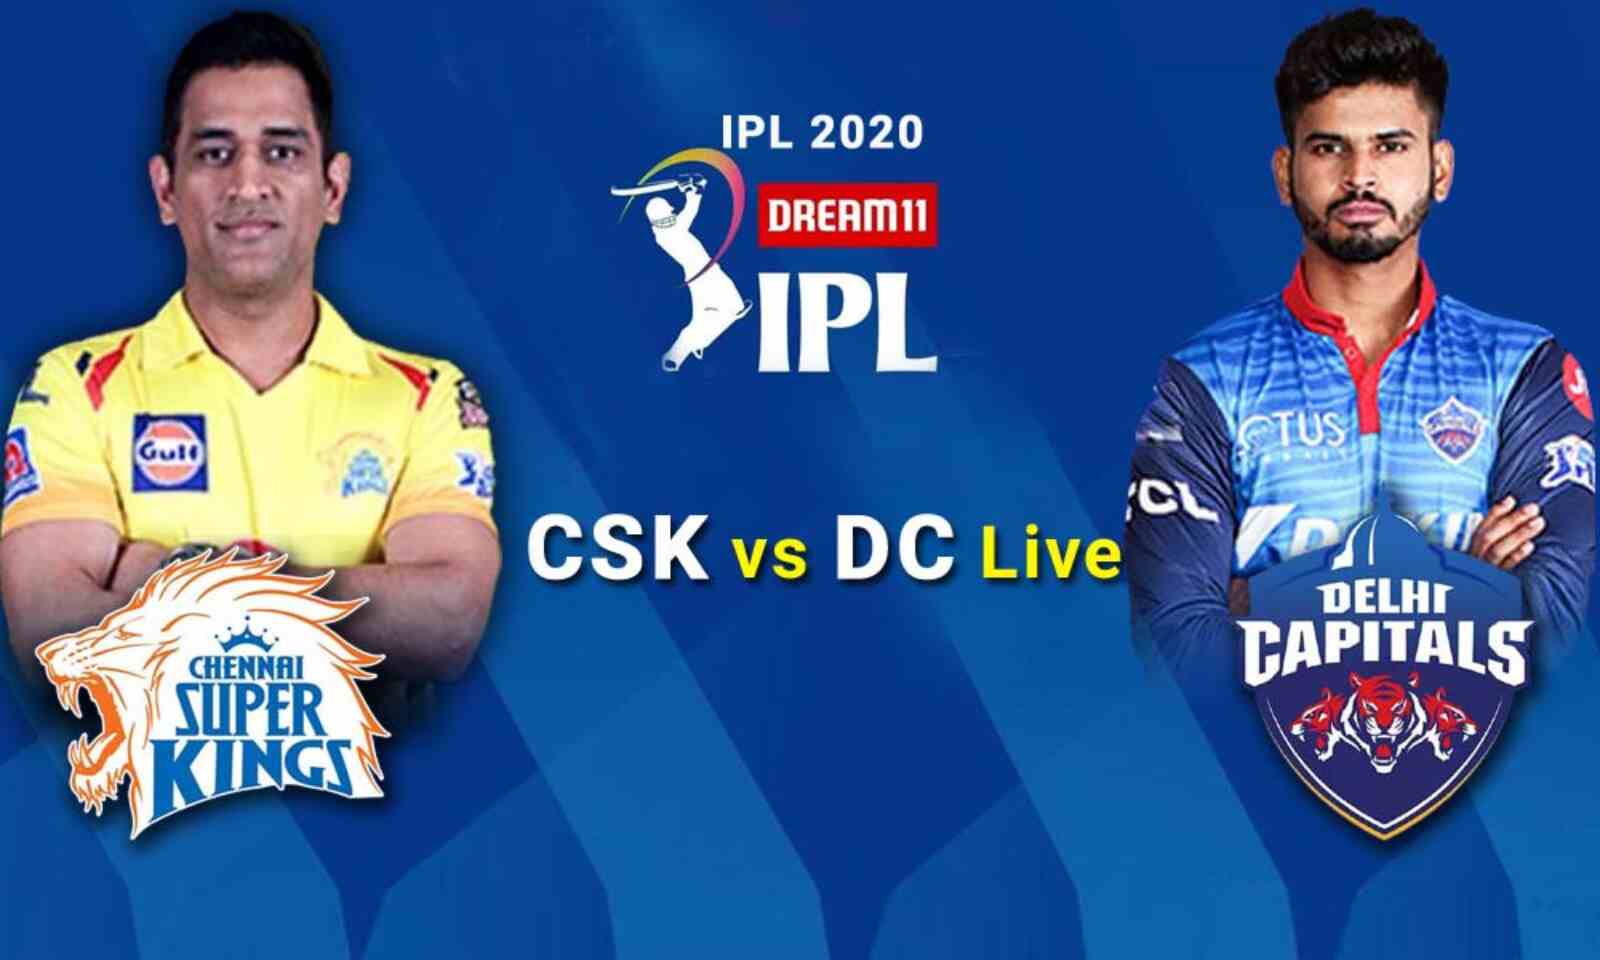 CSK vs DC Live Cricket Score, IPL 2020 Match 7 Updates Delhi Capitals beats Chennai Super Kings by 44 runs